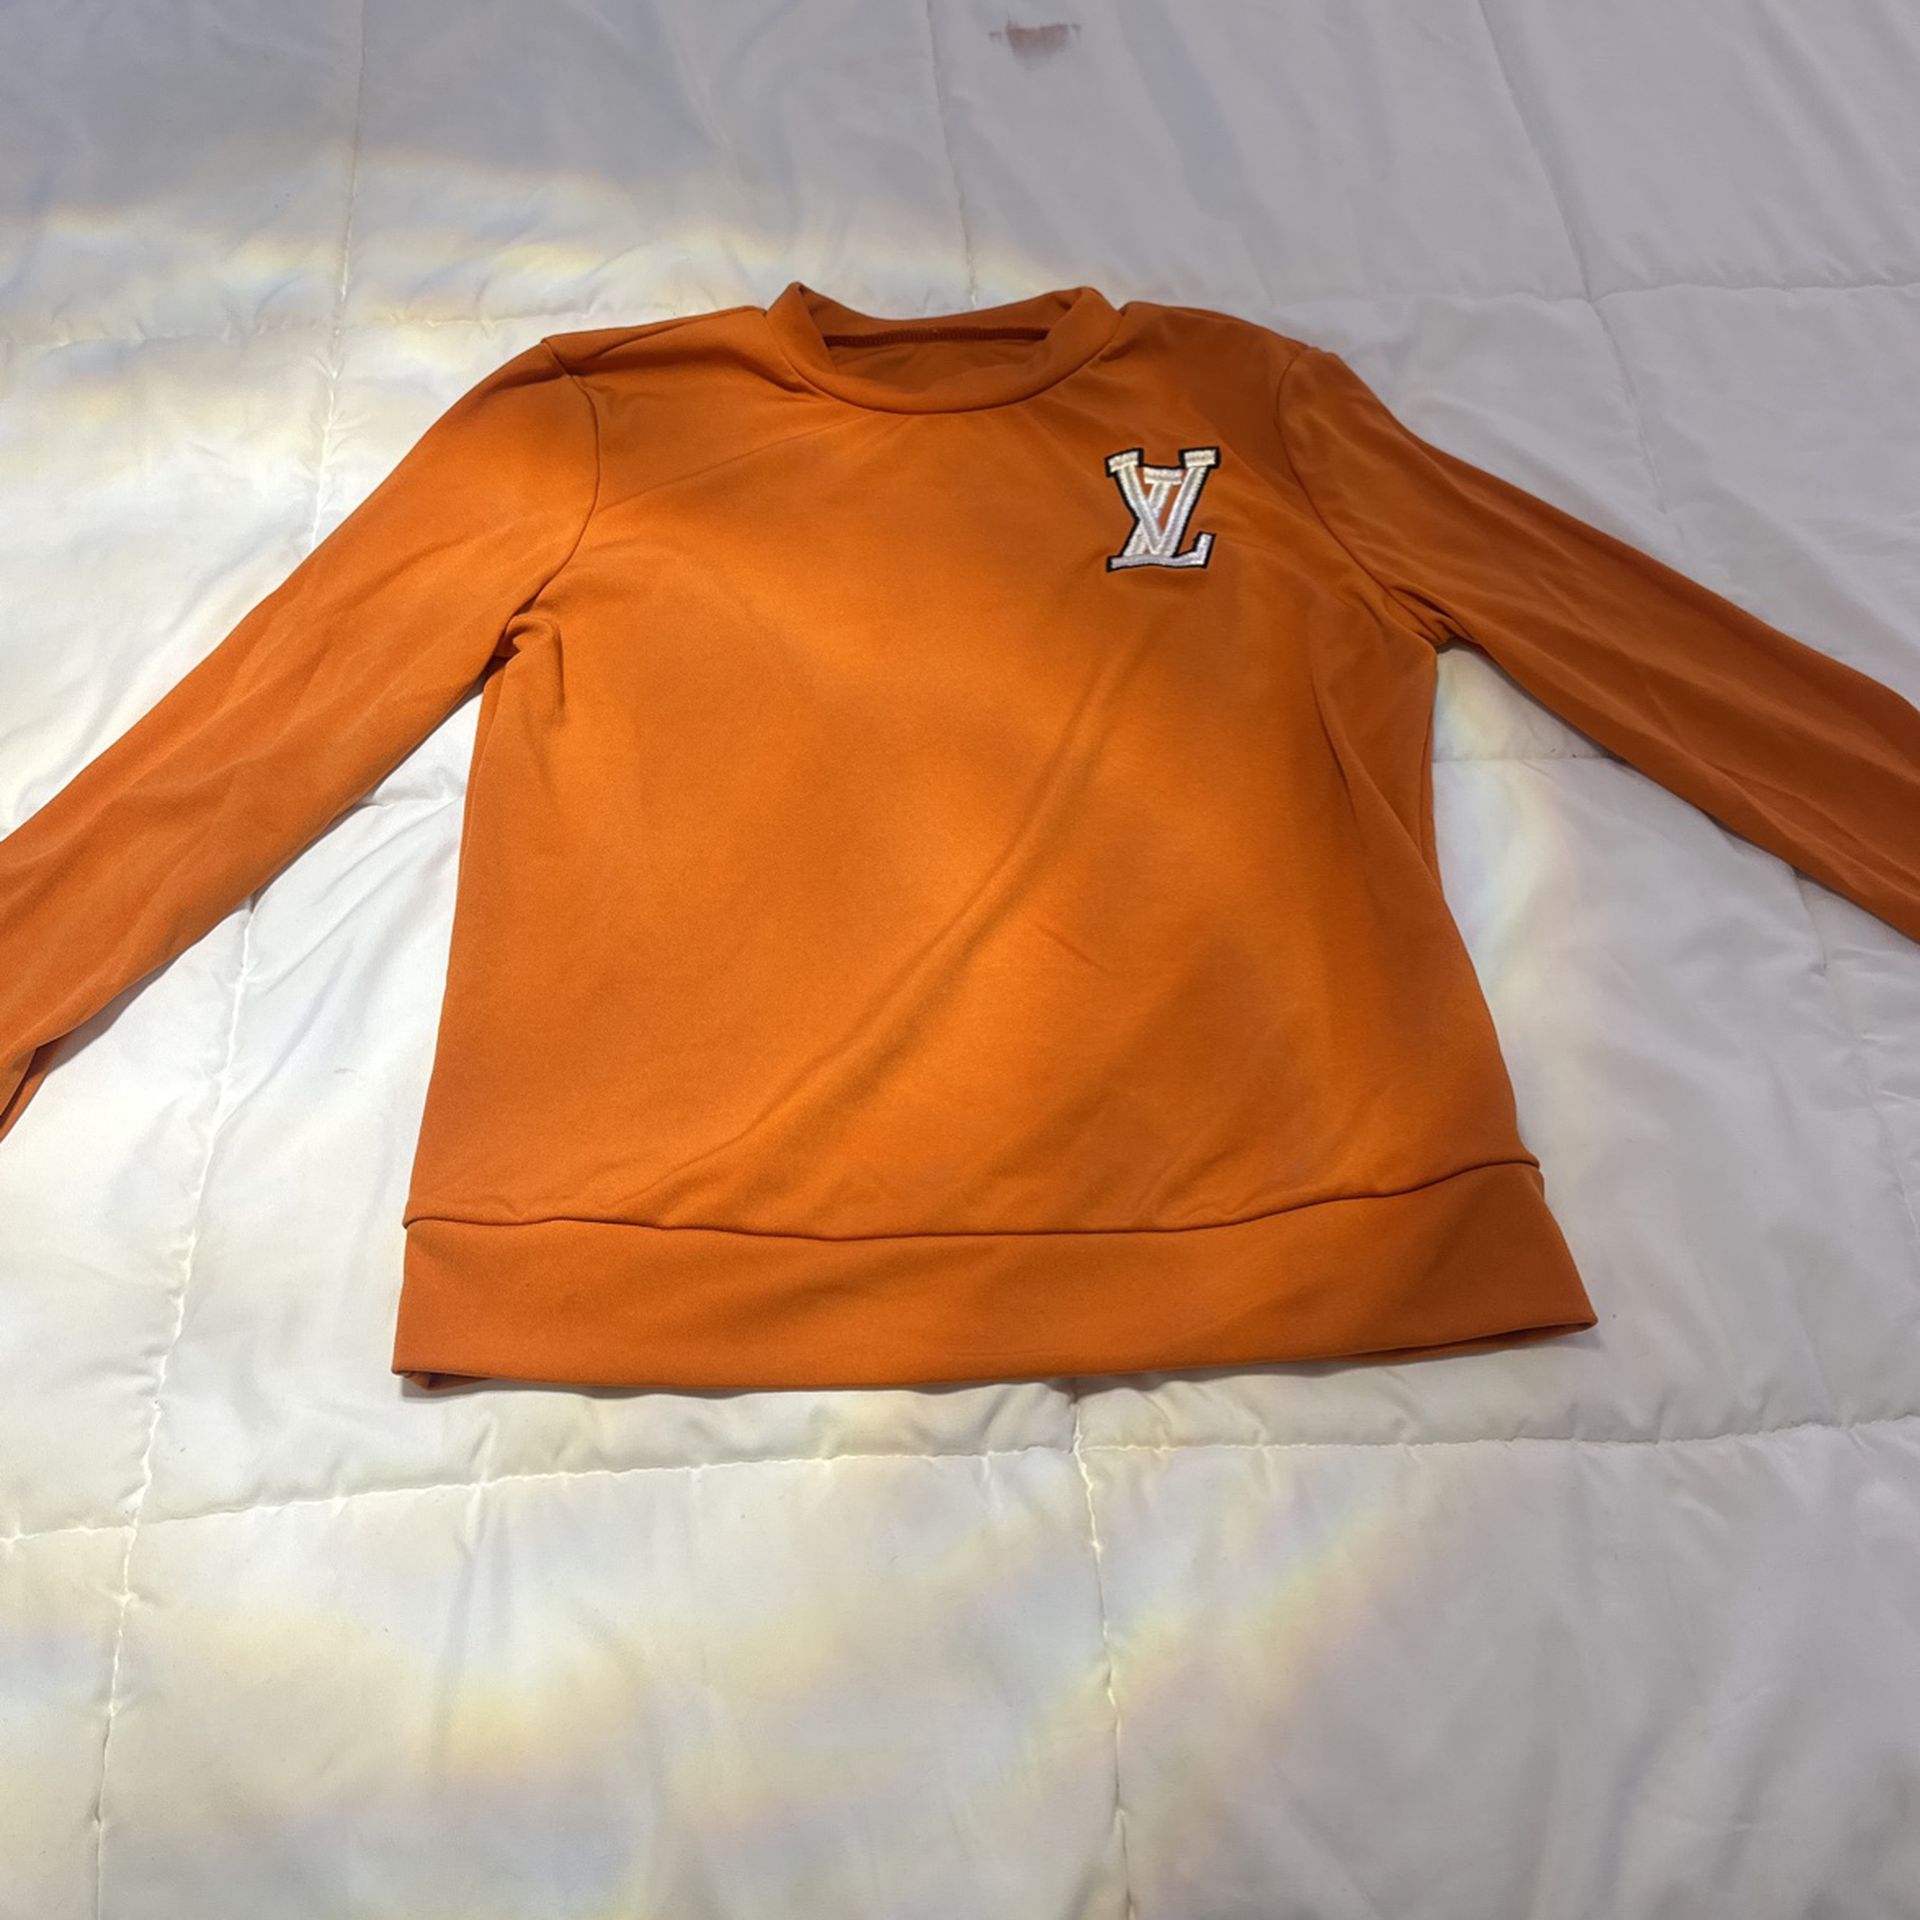 Lv orange top size medium for Sale in Montclair, CA - OfferUp